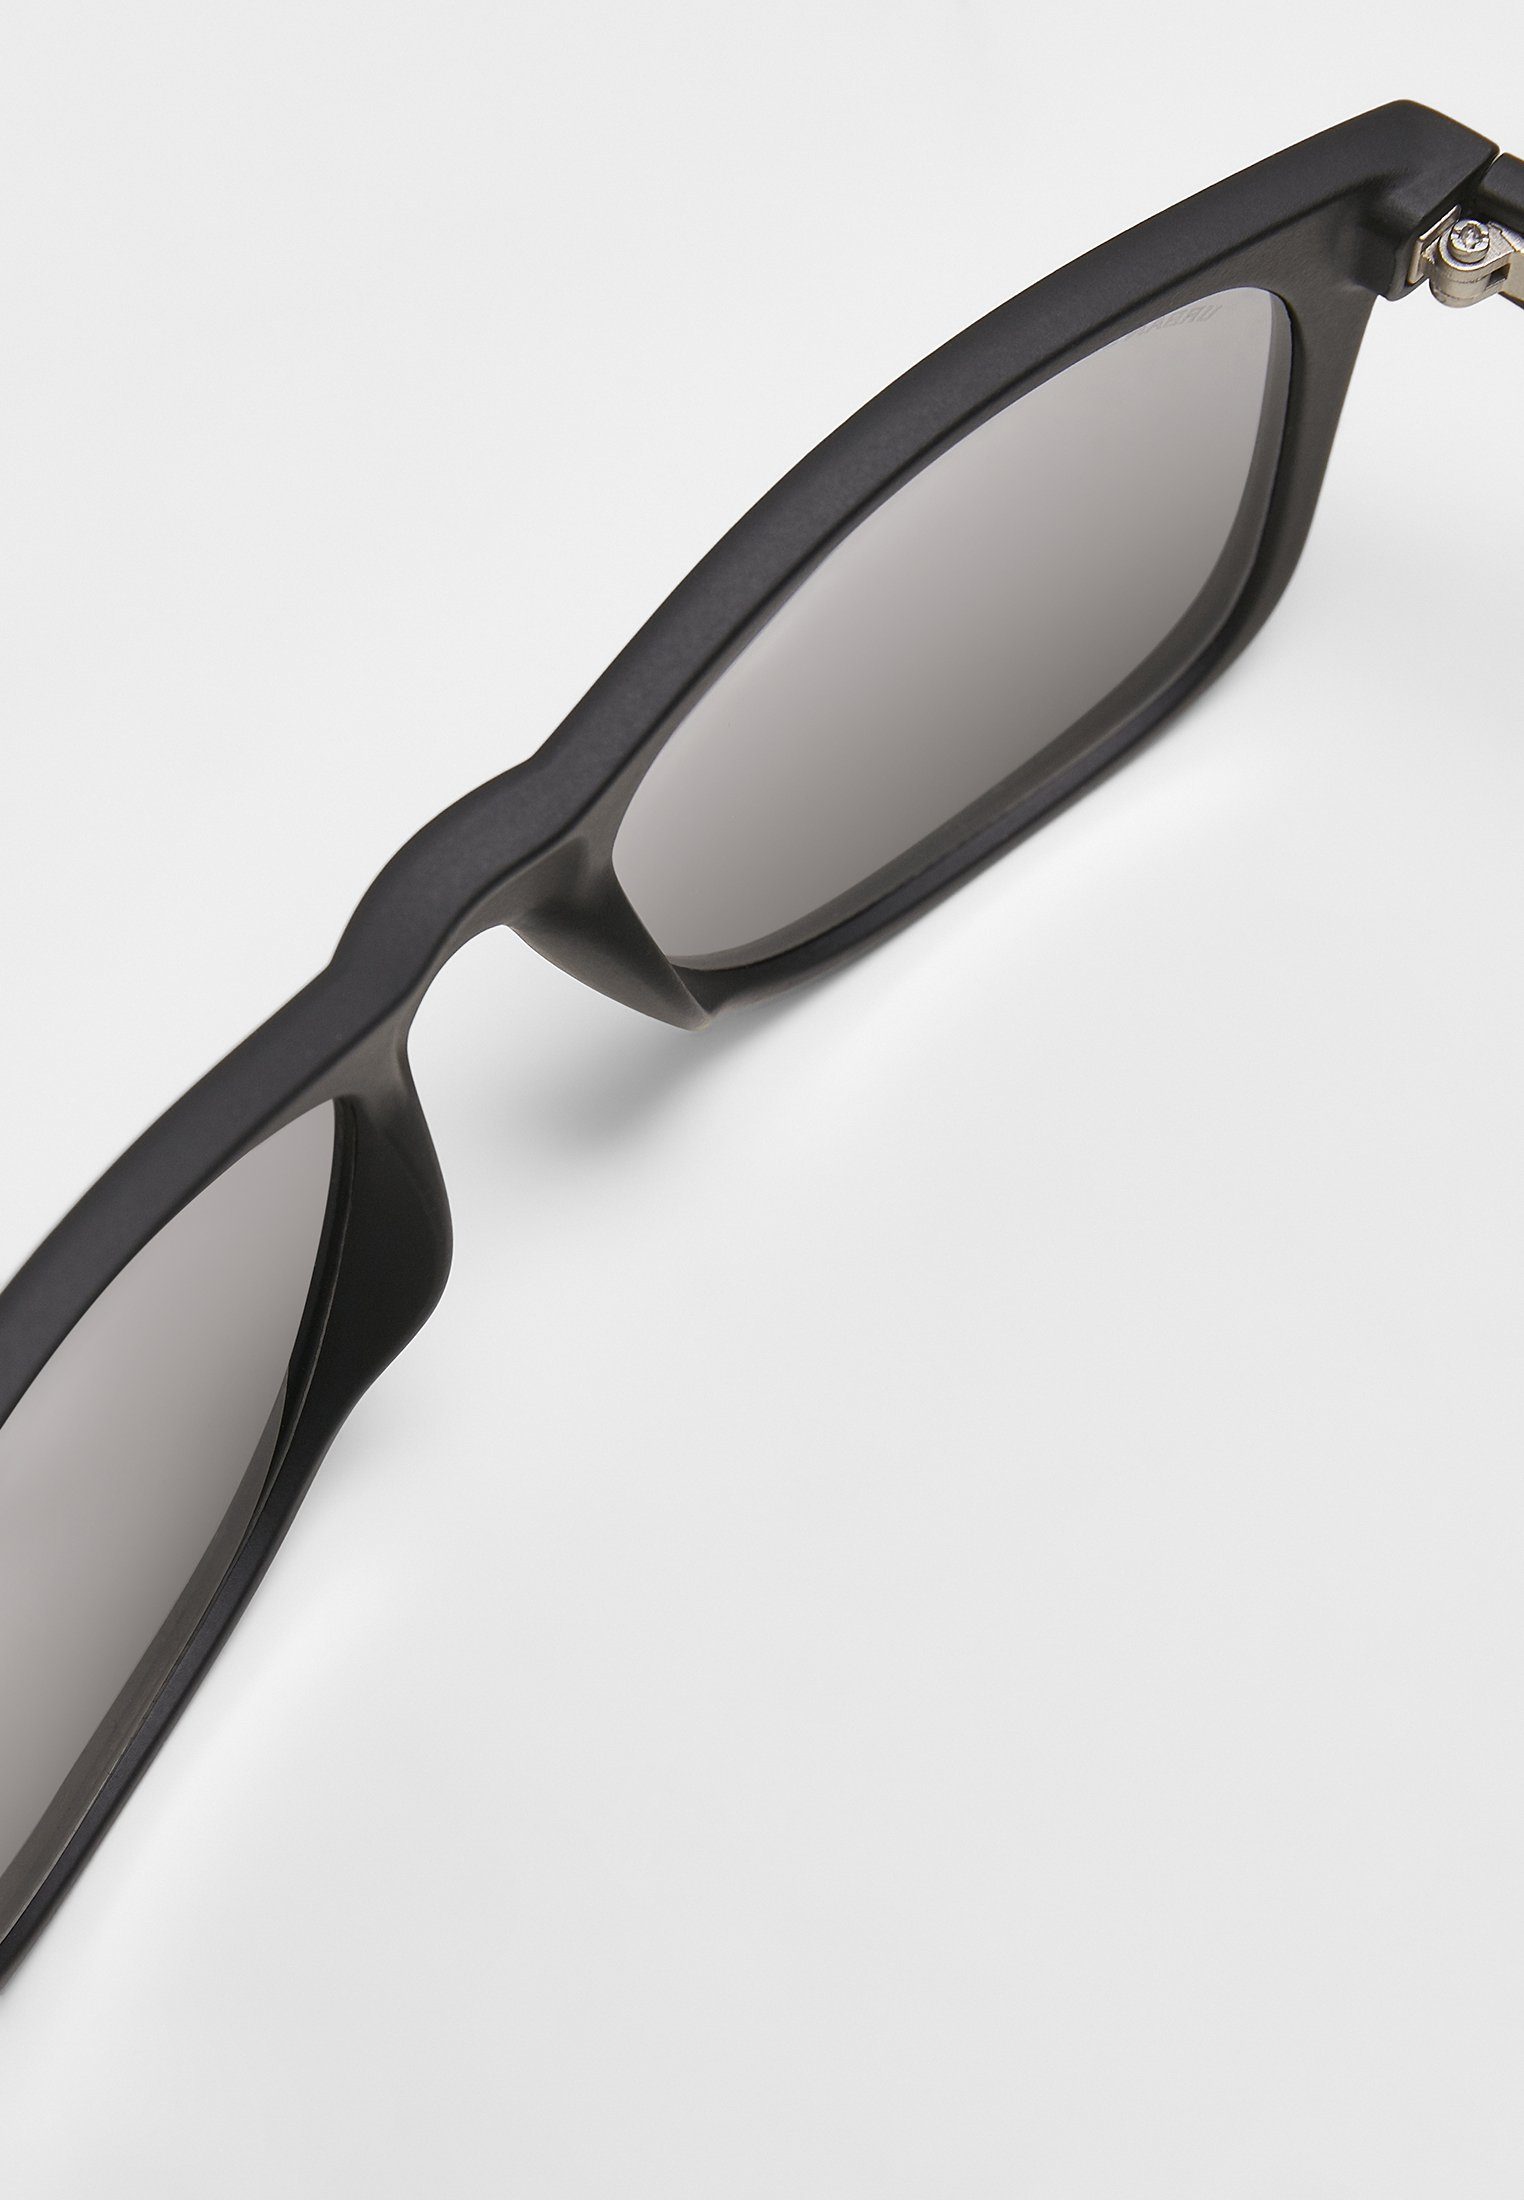 UC Sonnenbrille Mirror black/silver URBAN Likoma Sunglasses CLASSICS Accessoires